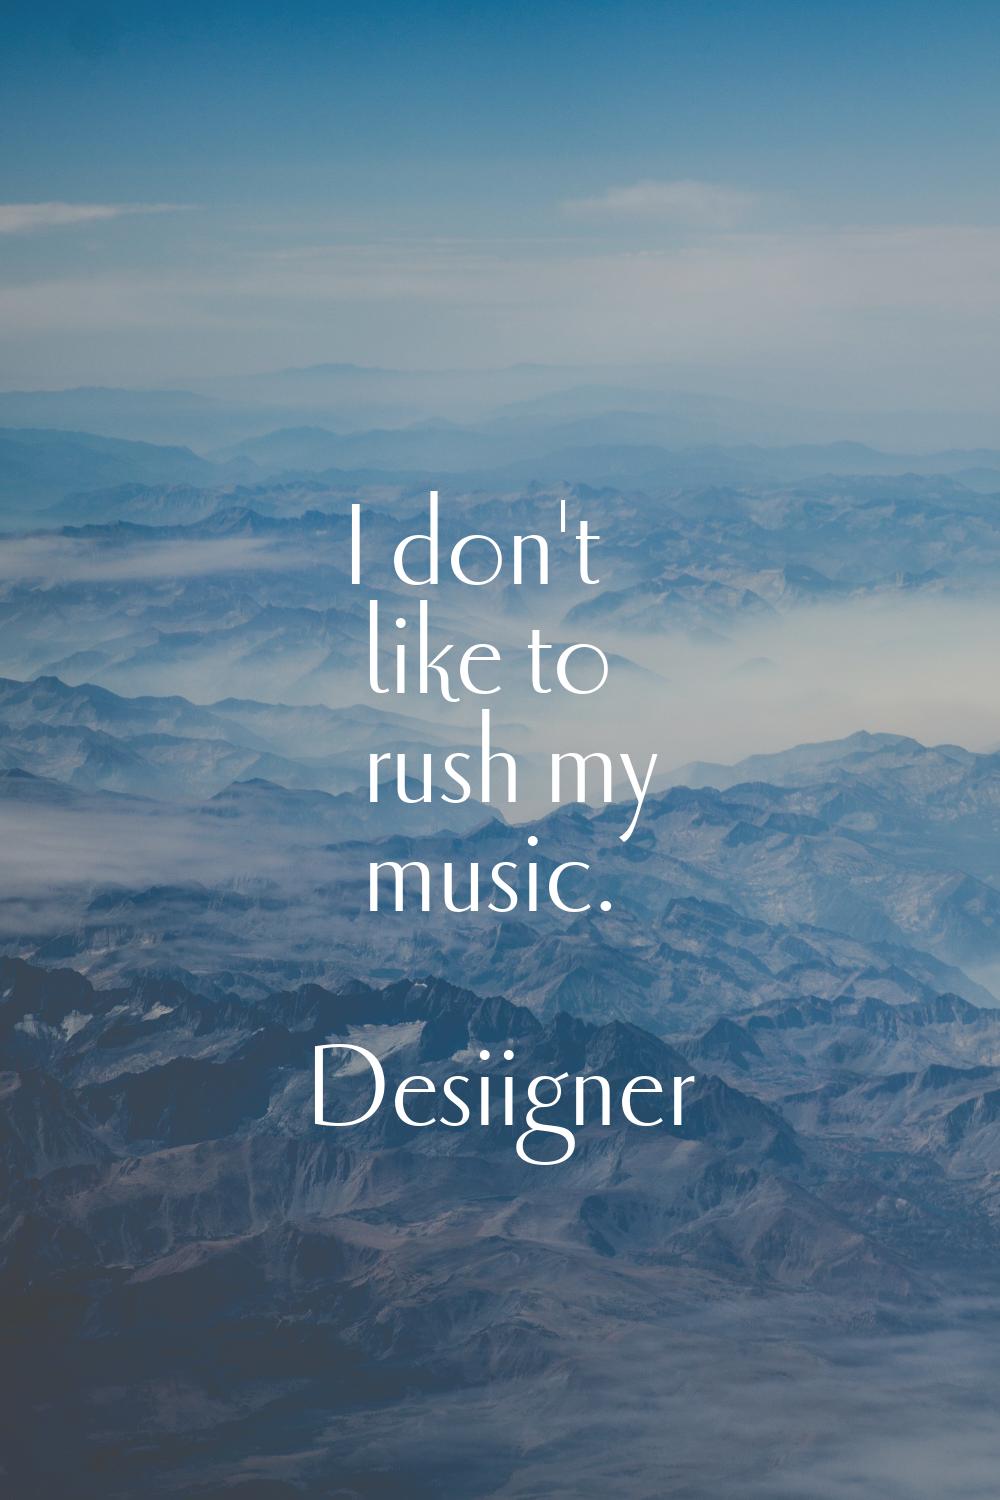 I don't like to rush my music.